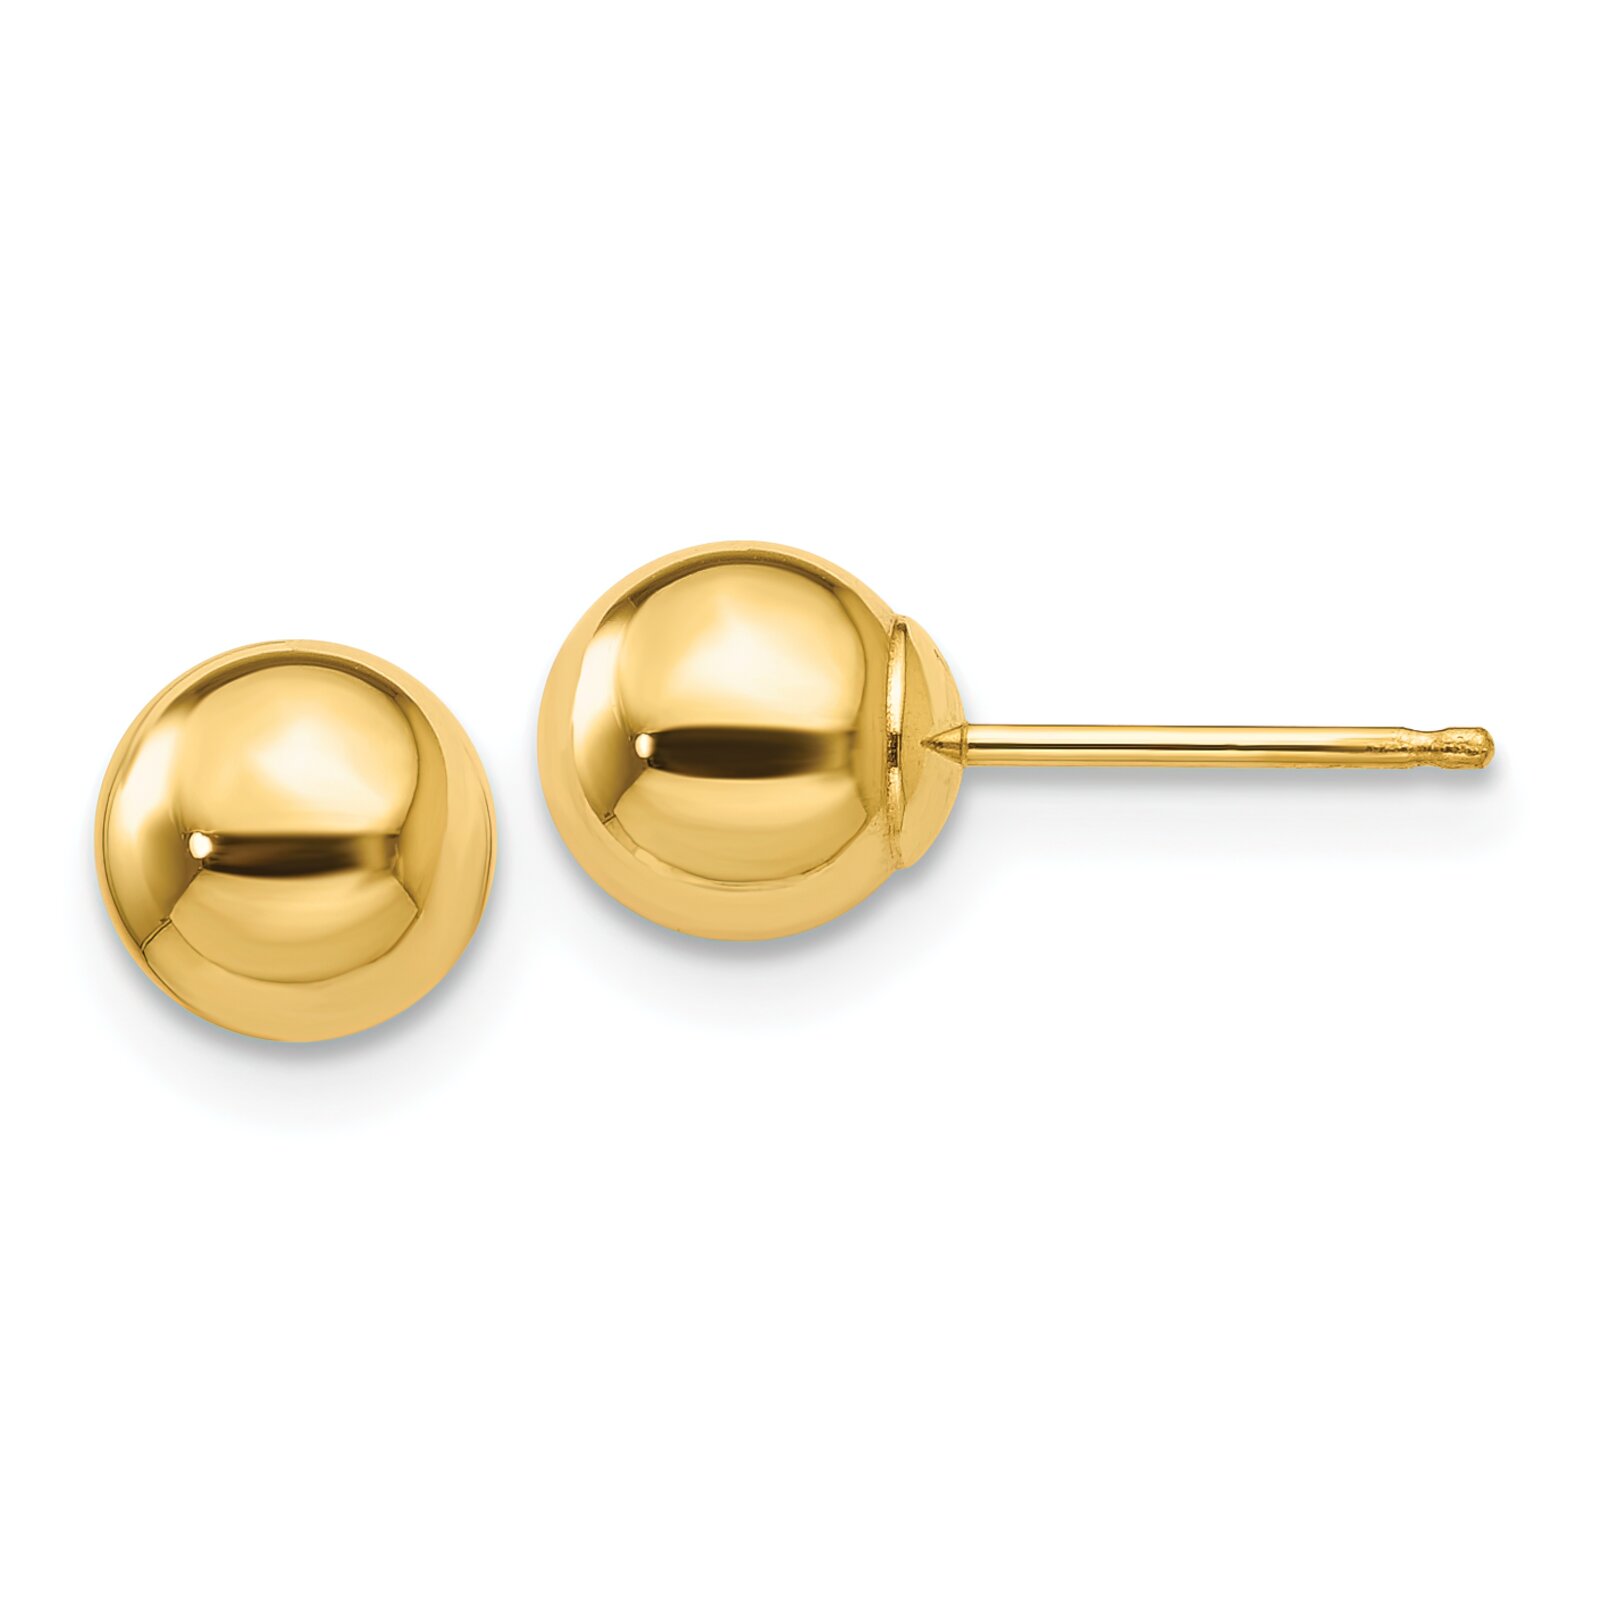 Findingking 14K Yellow Gold Ball Stud Earrings Jewelry 6mm